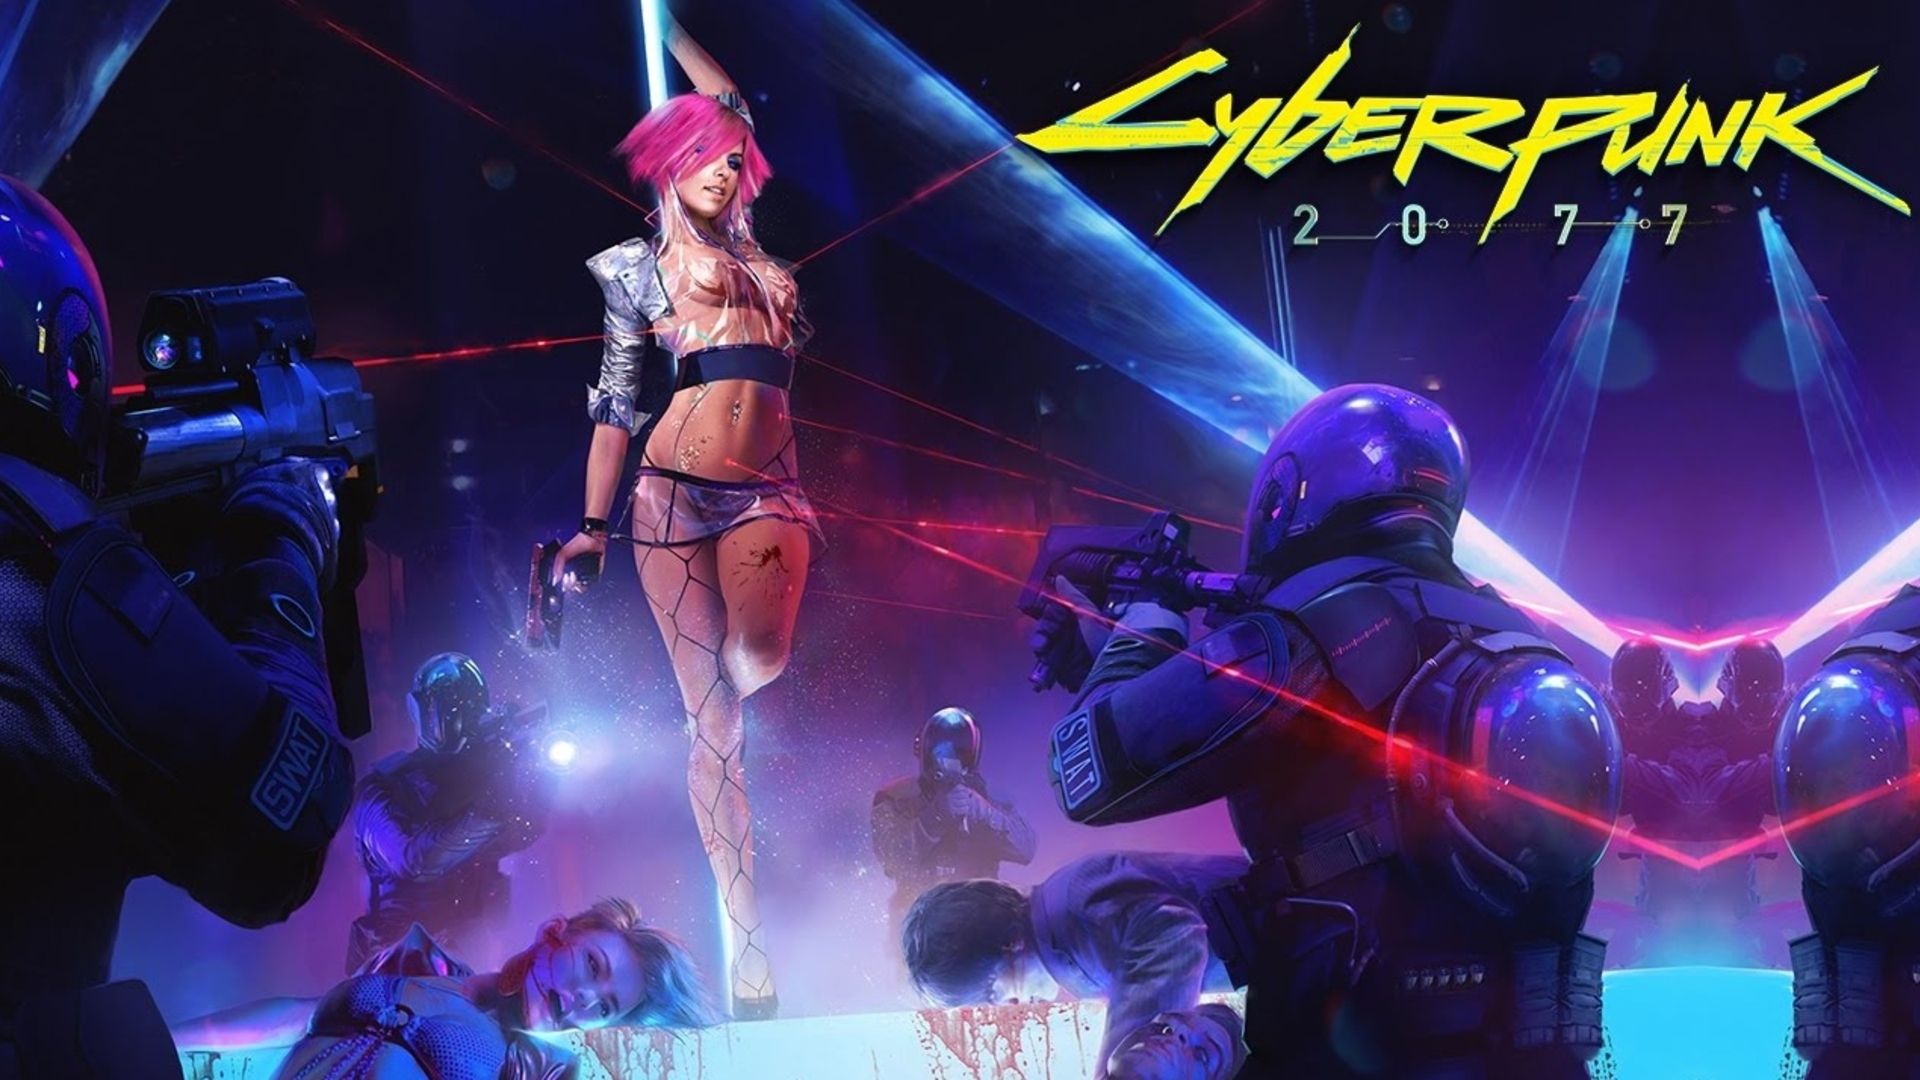 Video Game Cyberpunk 2077 4k Ultra HD Wallpaper by 空空 Kongkong